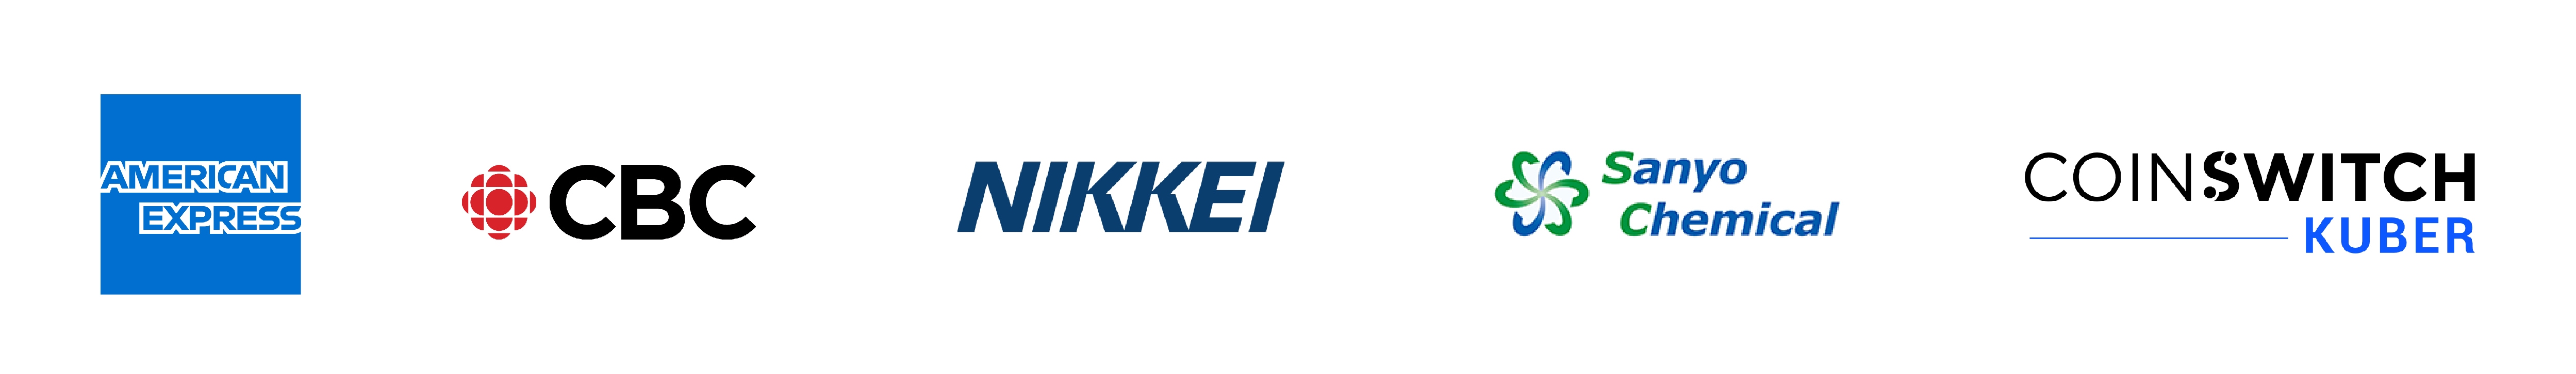 Customer logos: Amex, CBC, Nikkei, Sanyo Chemical, Coinswitch Kuber 